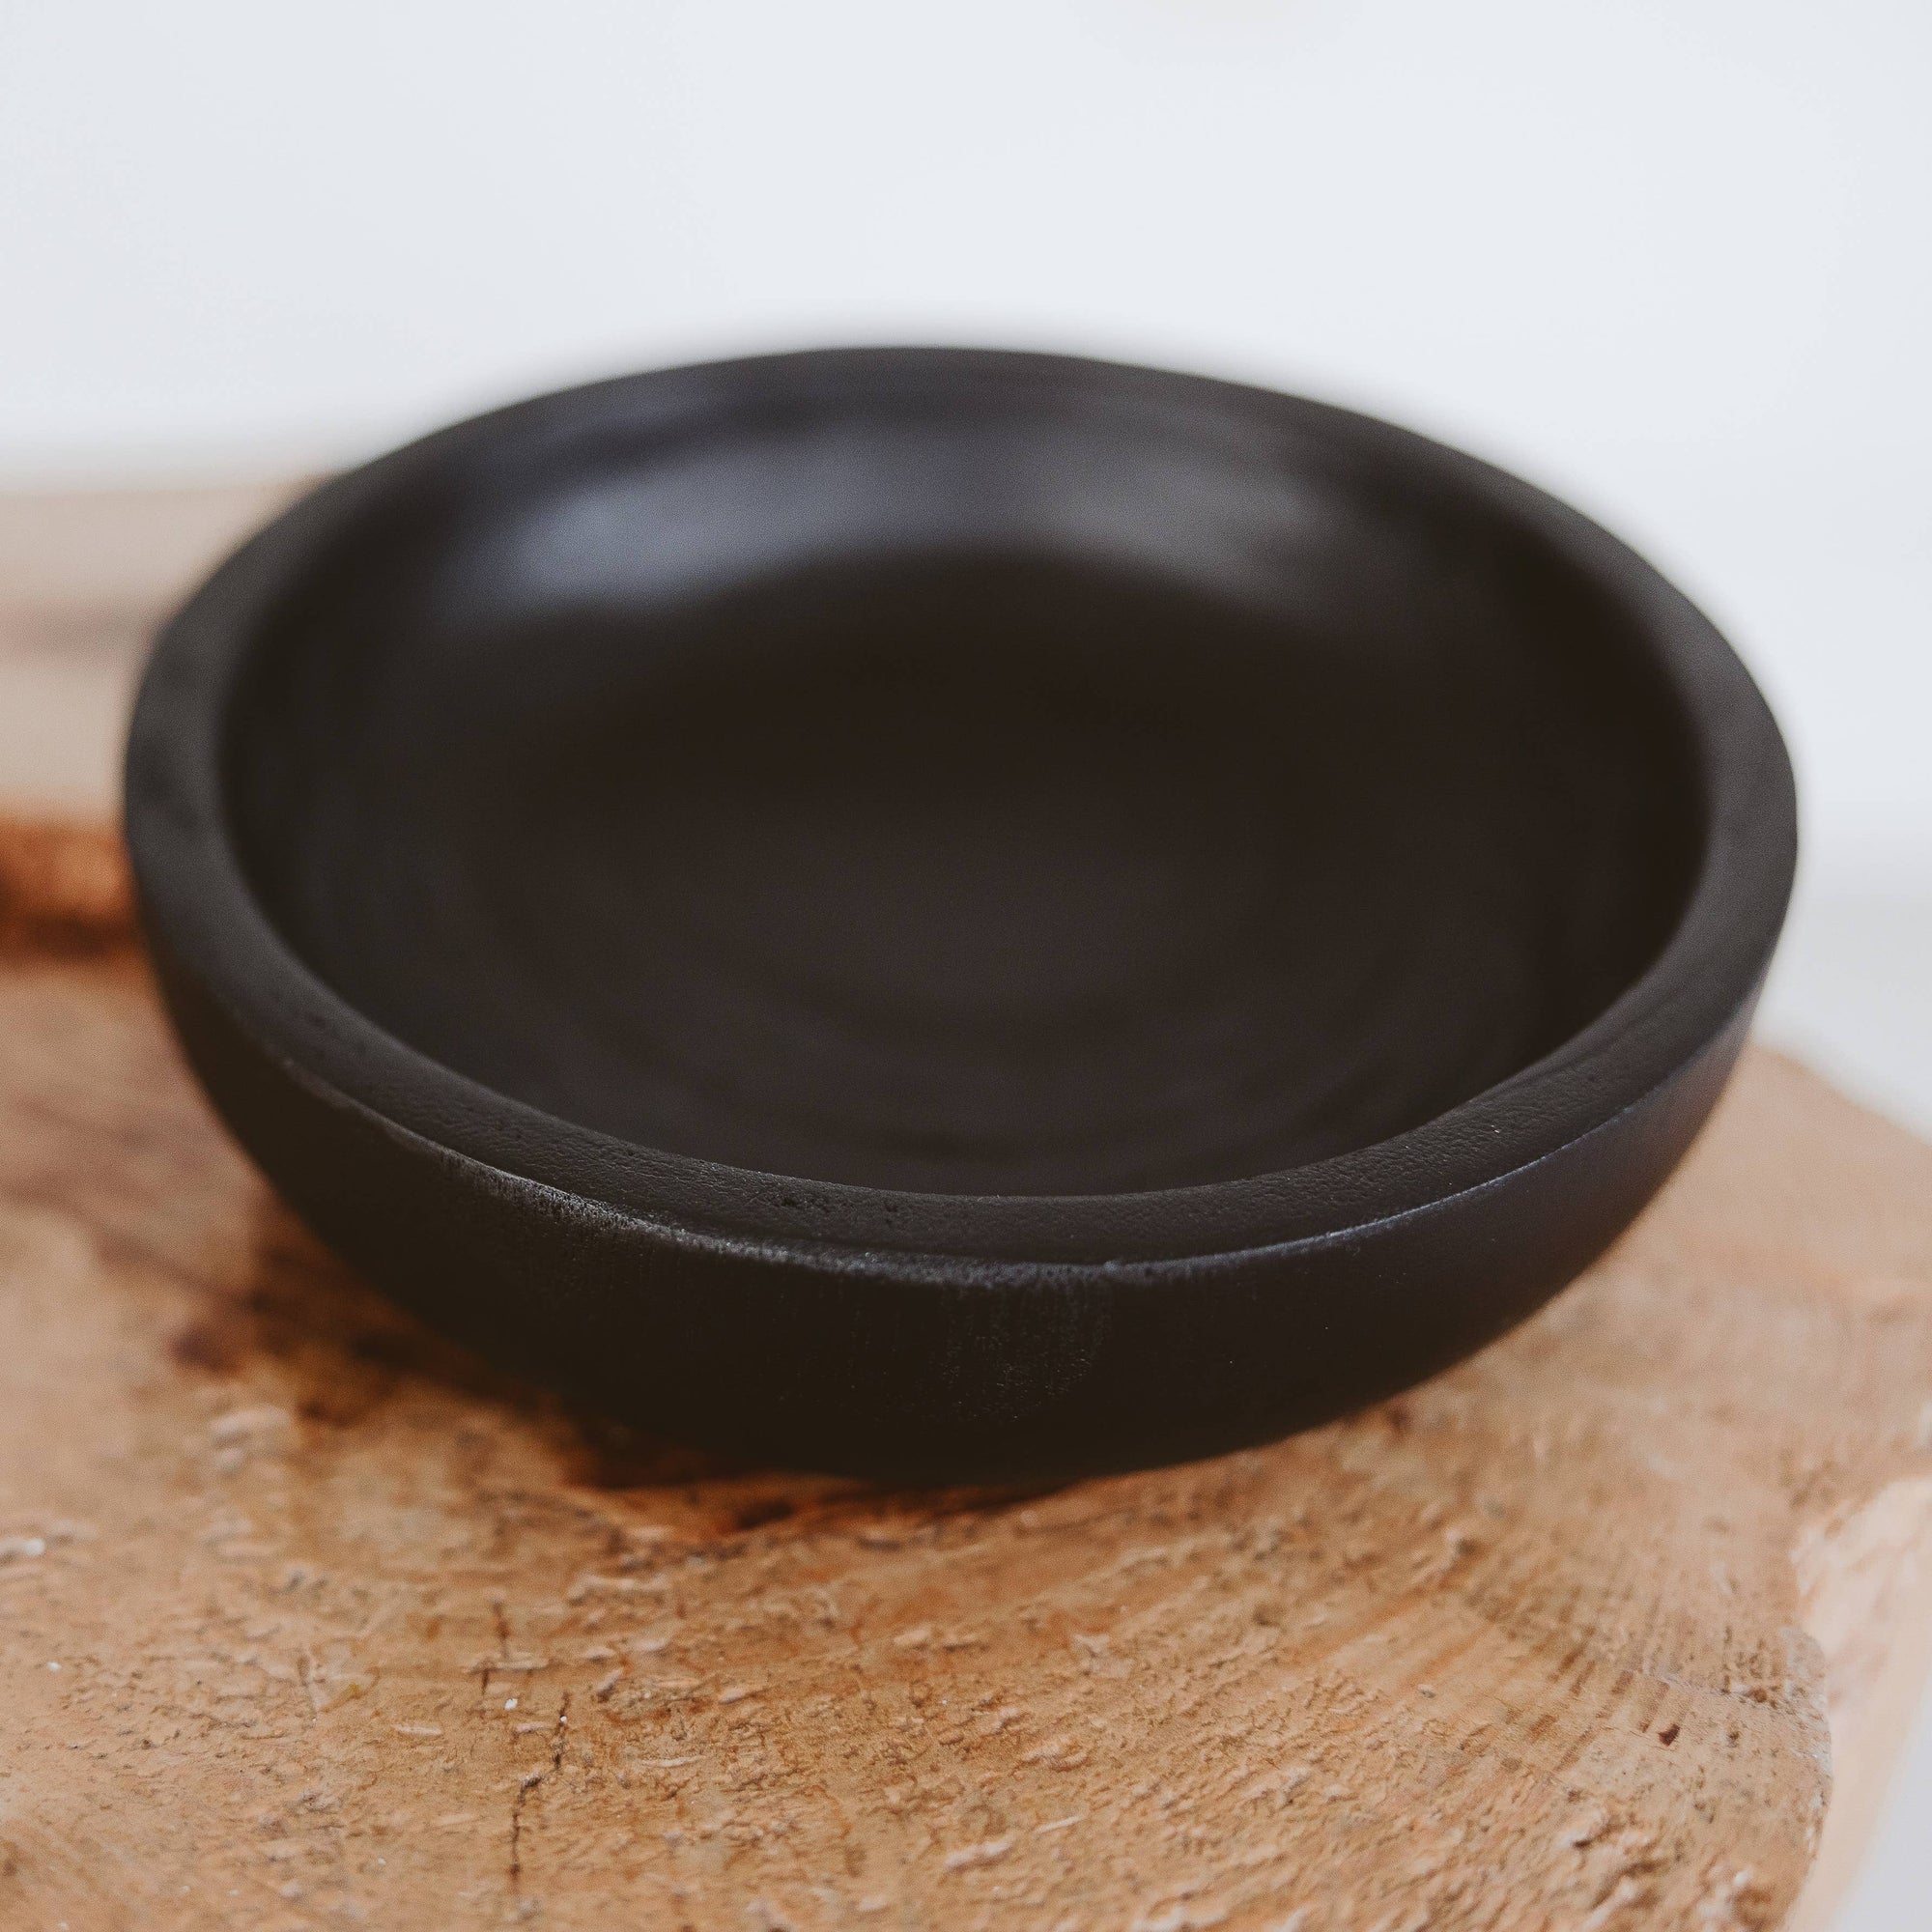 Black Decorative Wood Bowl